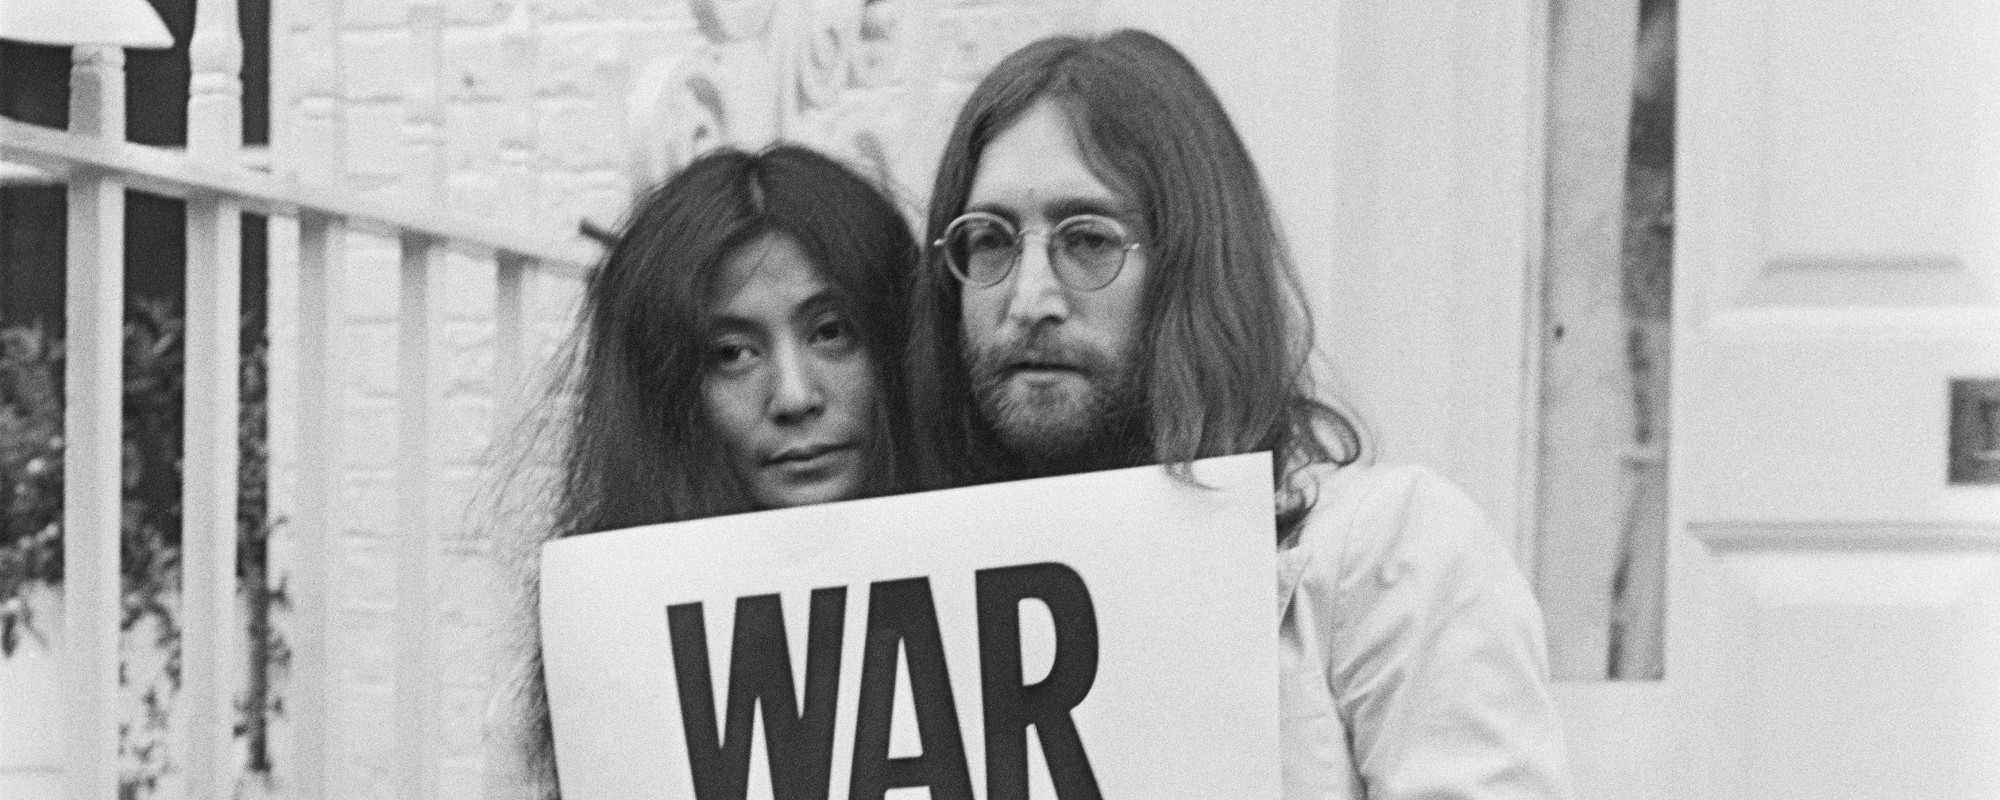 Sean Lennon Has Co-Written an Animated Short Film Based on John Lennon & Yoko Ono’s “Happy Xmas (War Is Over)”